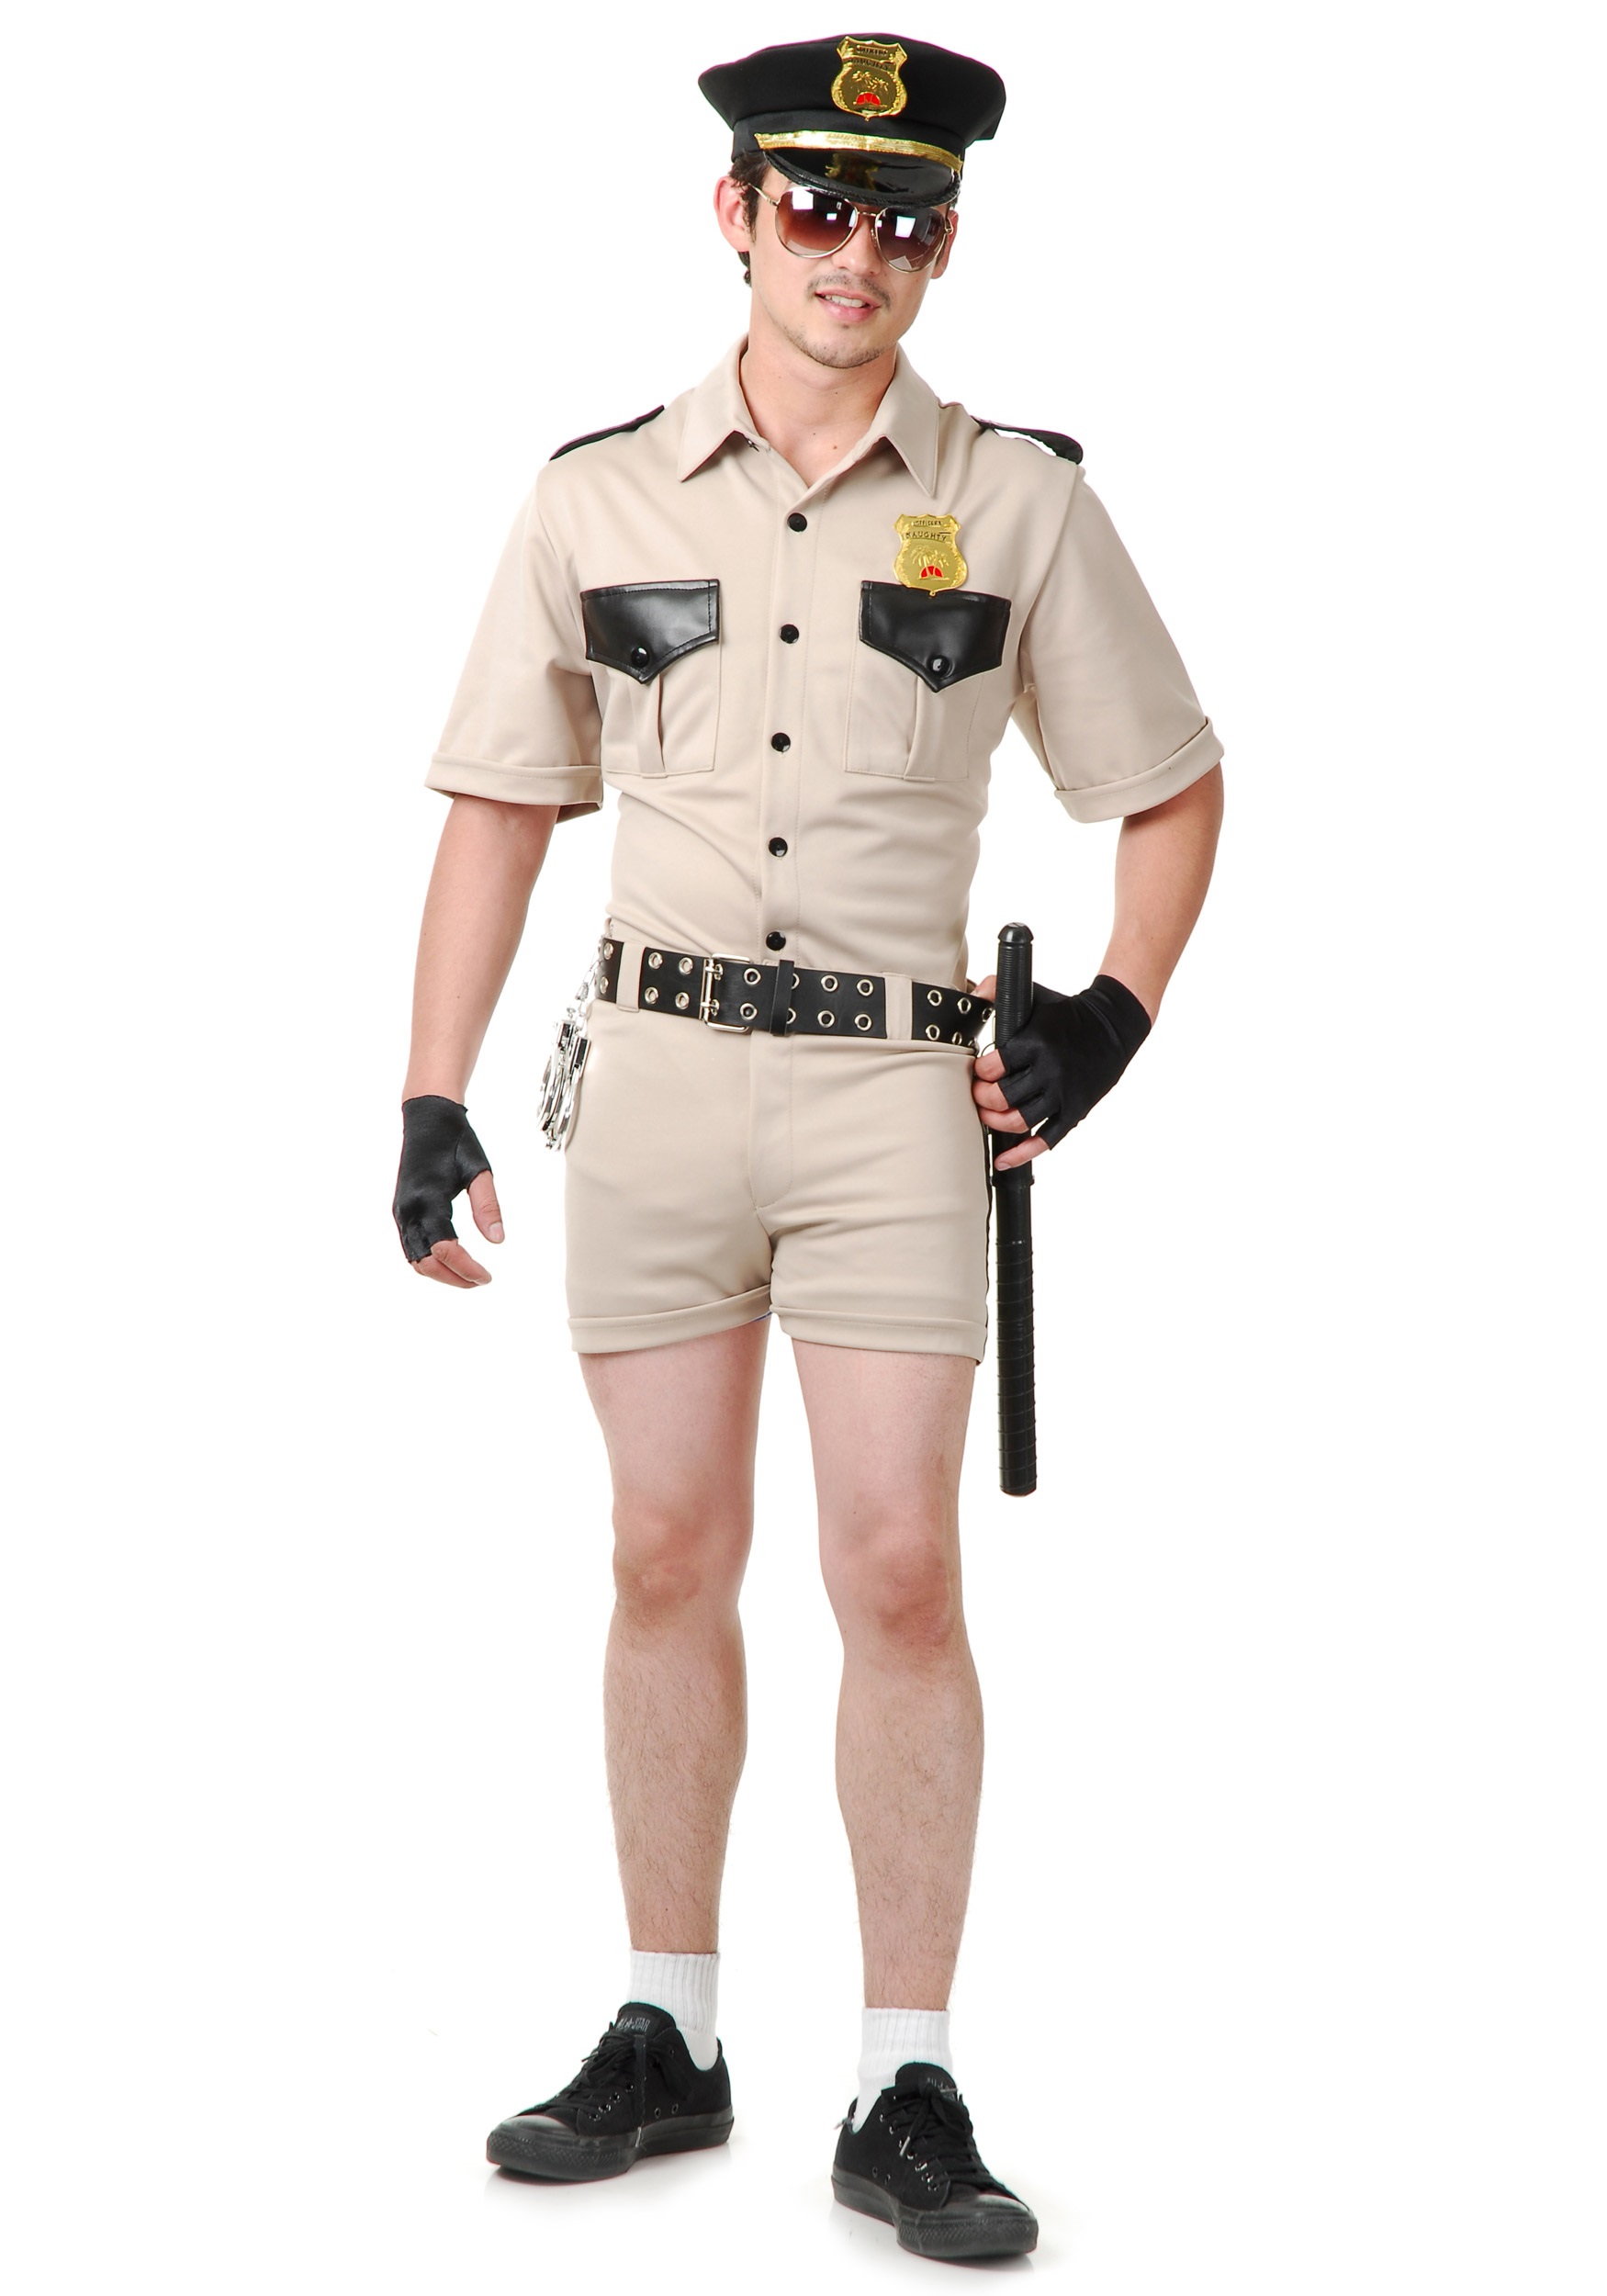 Plus Size Reno Cop Costume | This Plus Size Reno Cop Costume would make a g...